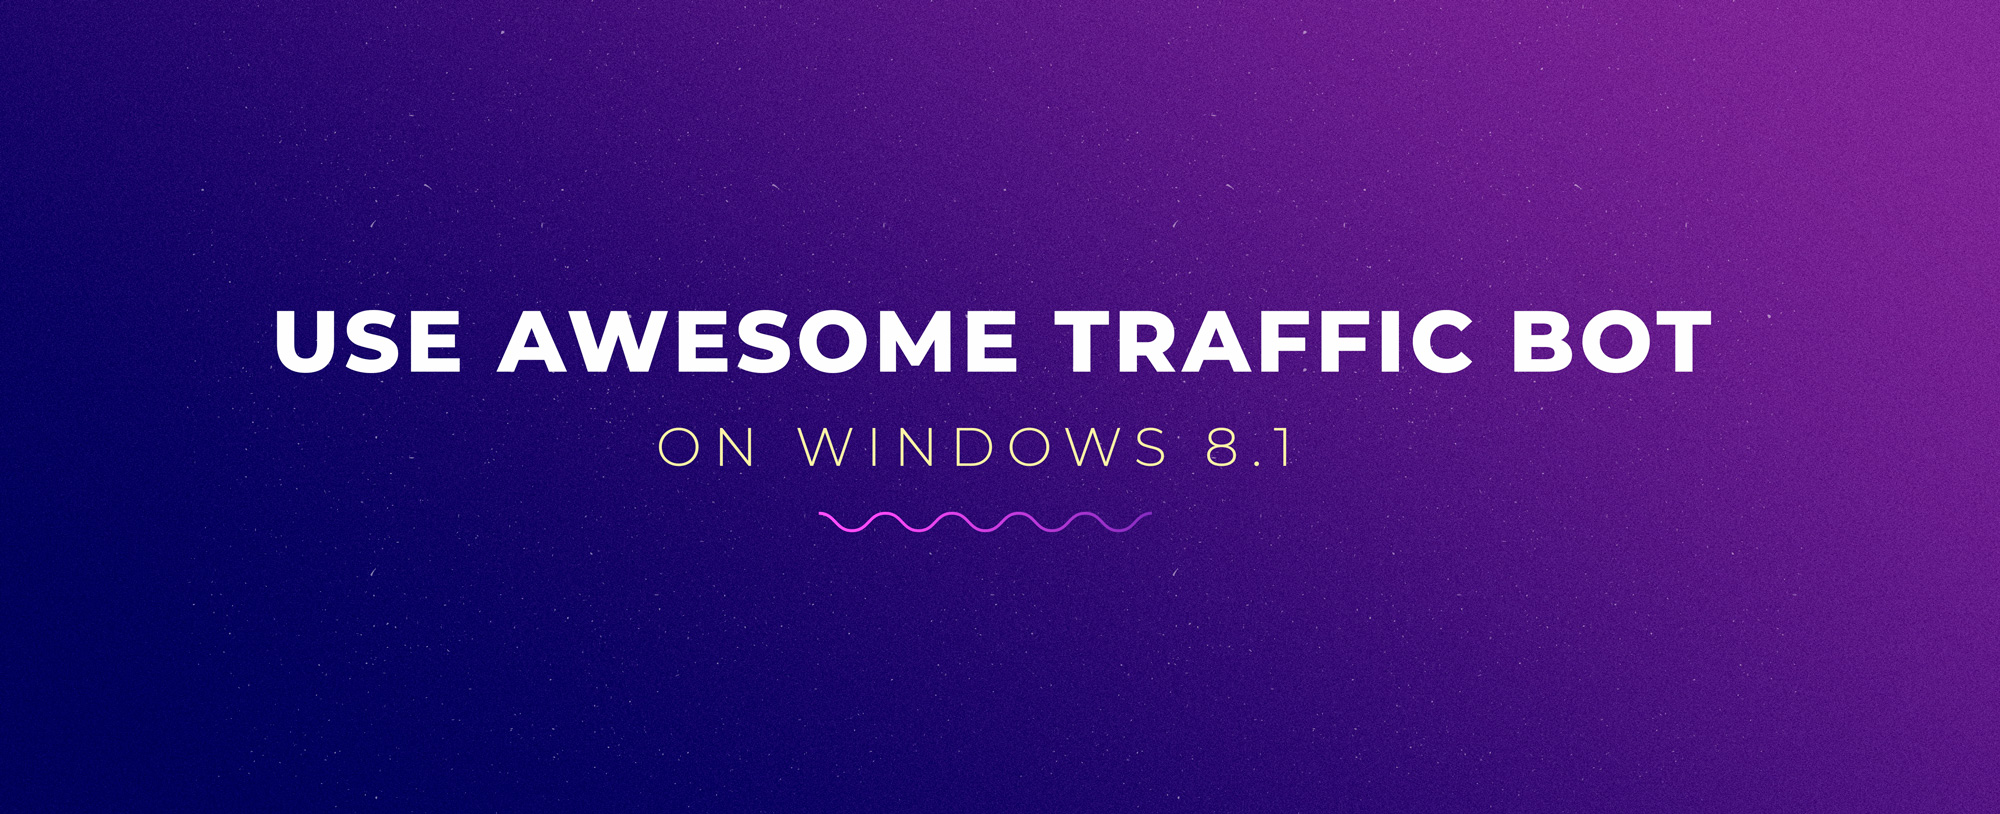 Use Awesome Traffic Bot on Windows 8.1